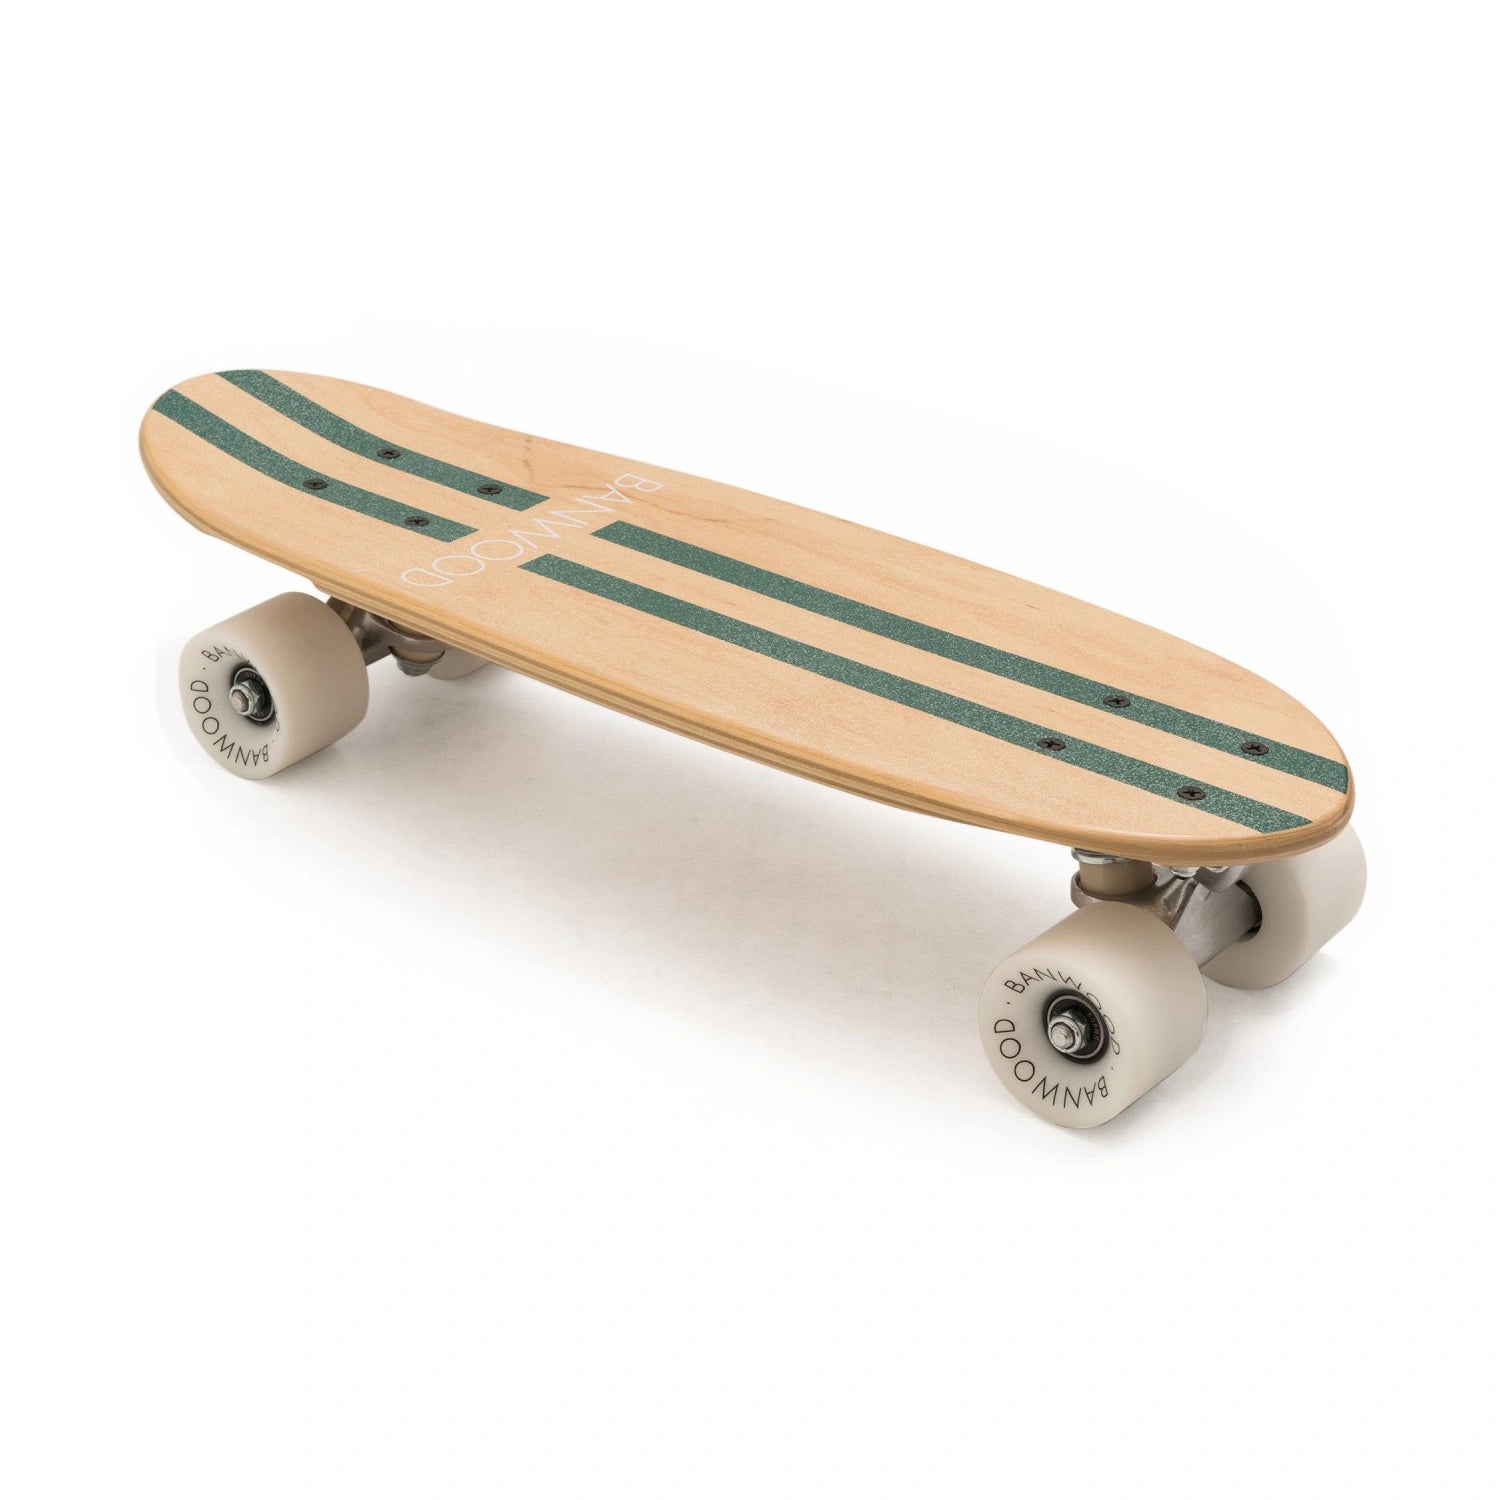 An image of Banwood Buy Banwood Skateboard for Kids (Green) - SmallSmart UK